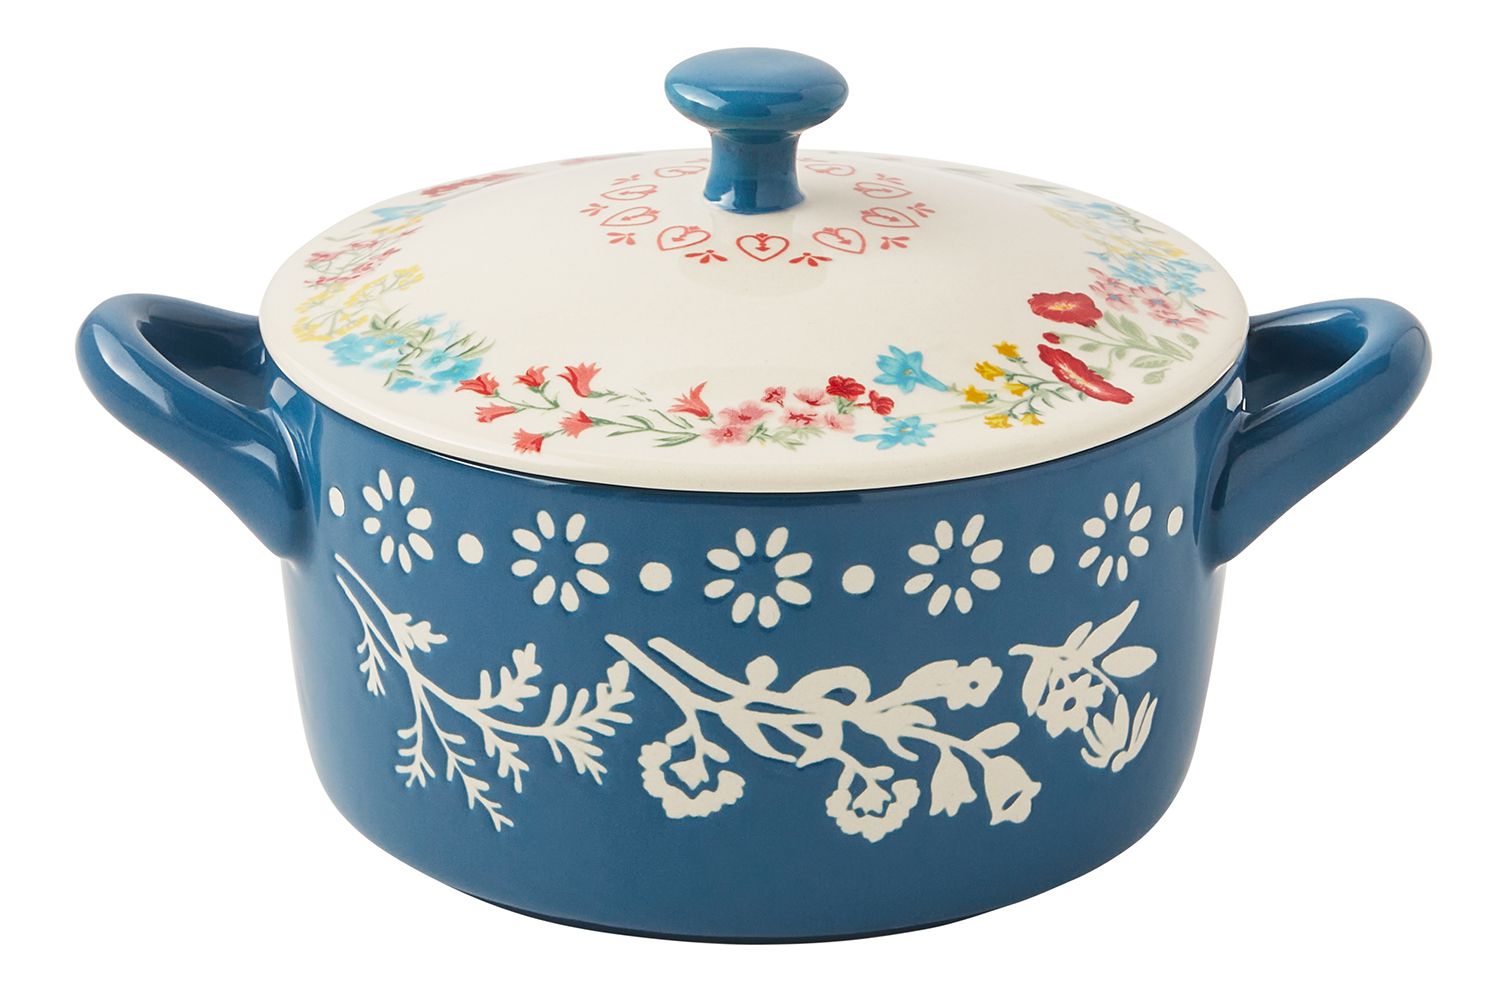 The Pioneer Woman Fancy Flourish Round Ceramic Mini Casserole Dish